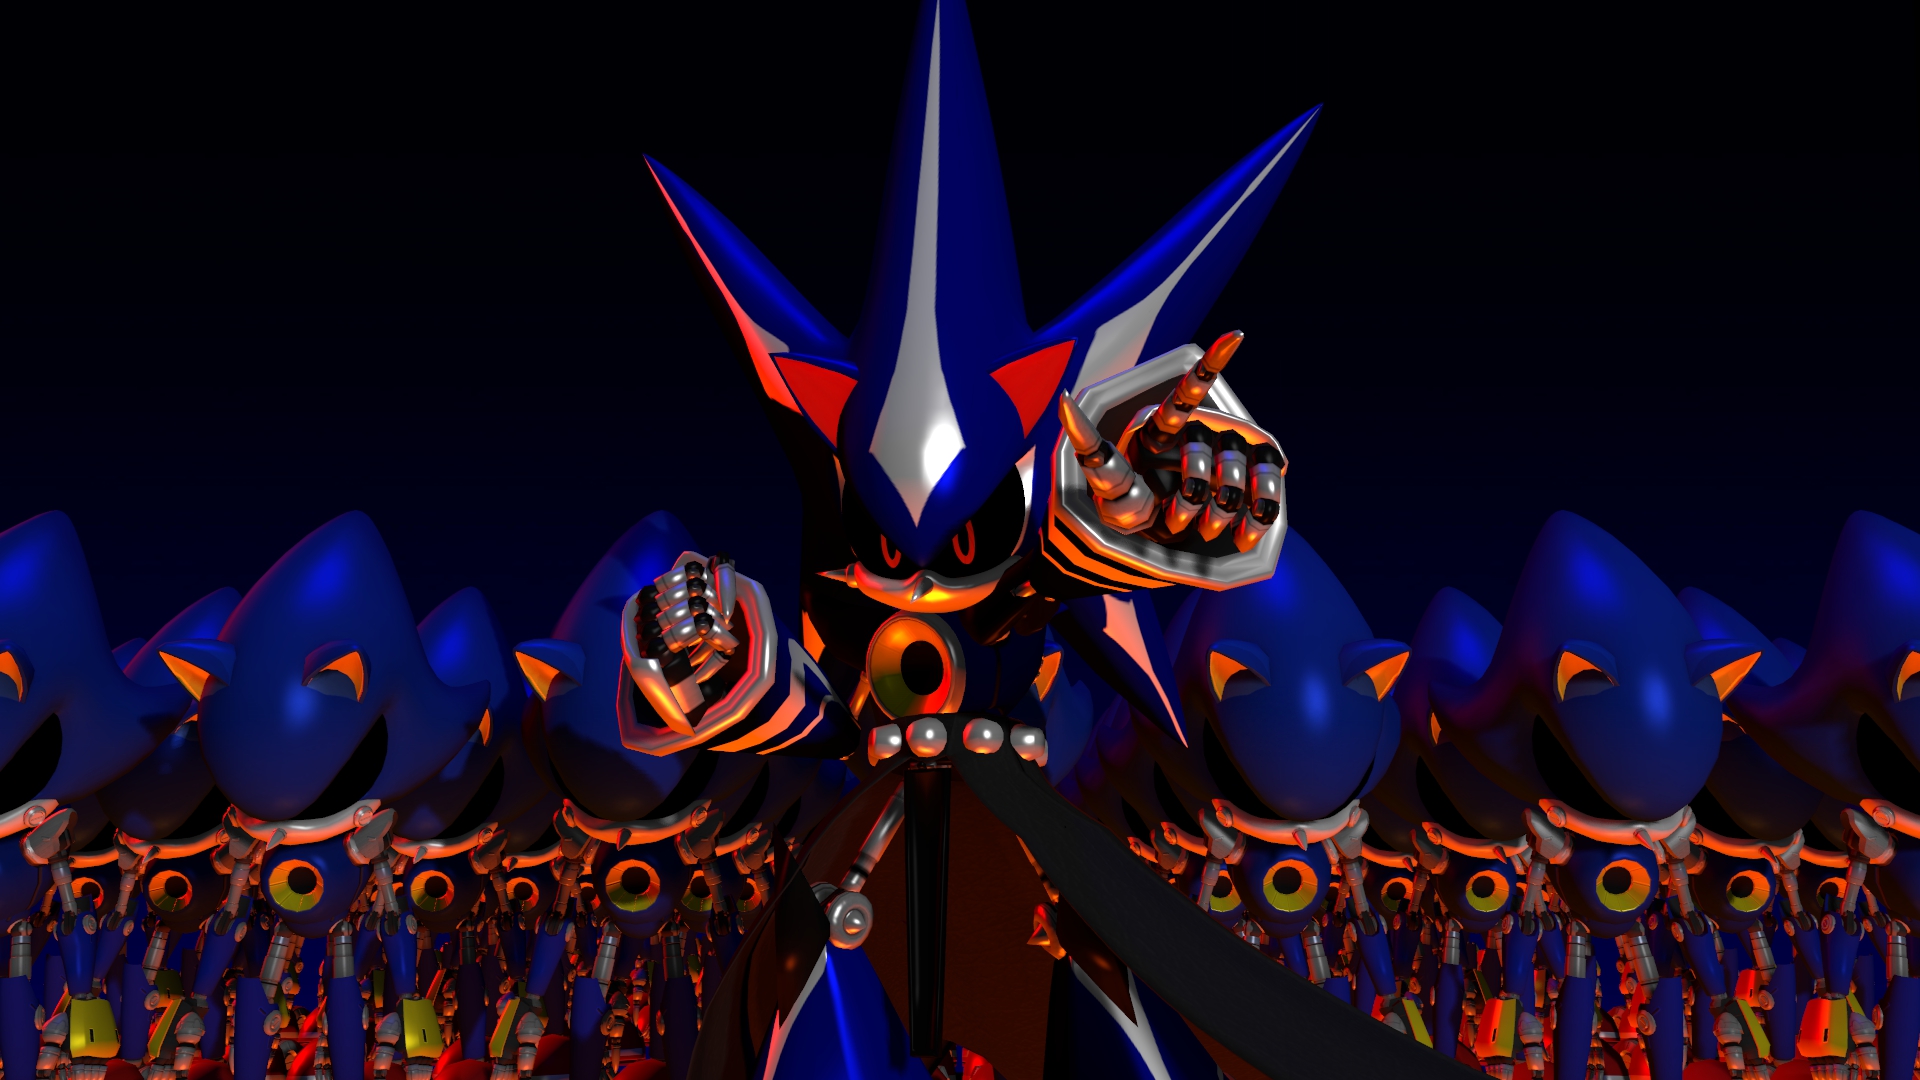 Super Neo Metal Sonic by cybervader311 on DeviantArt